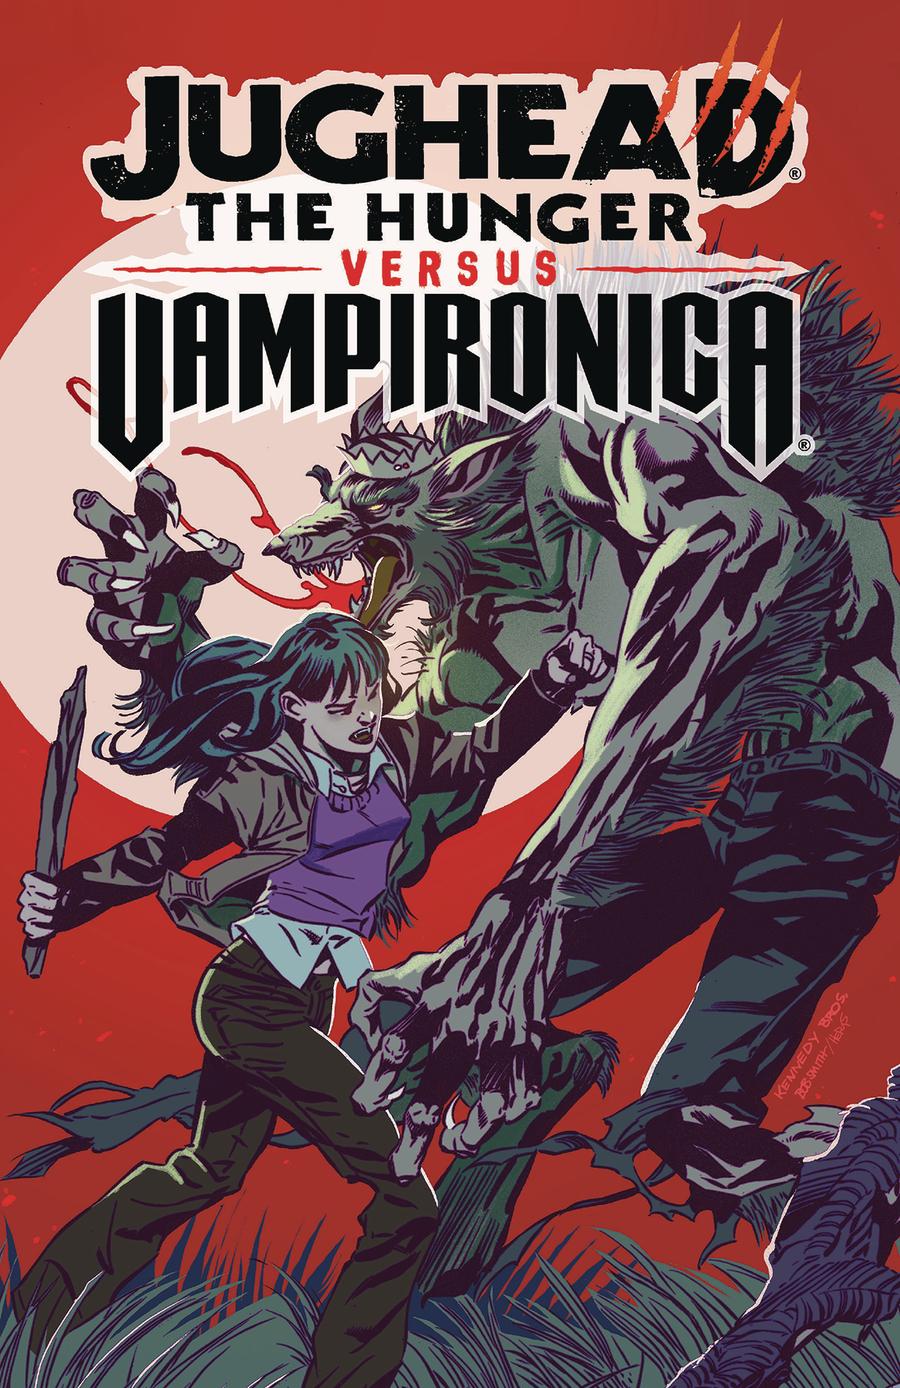 Jughead The Hunger Versus Vampironica TP